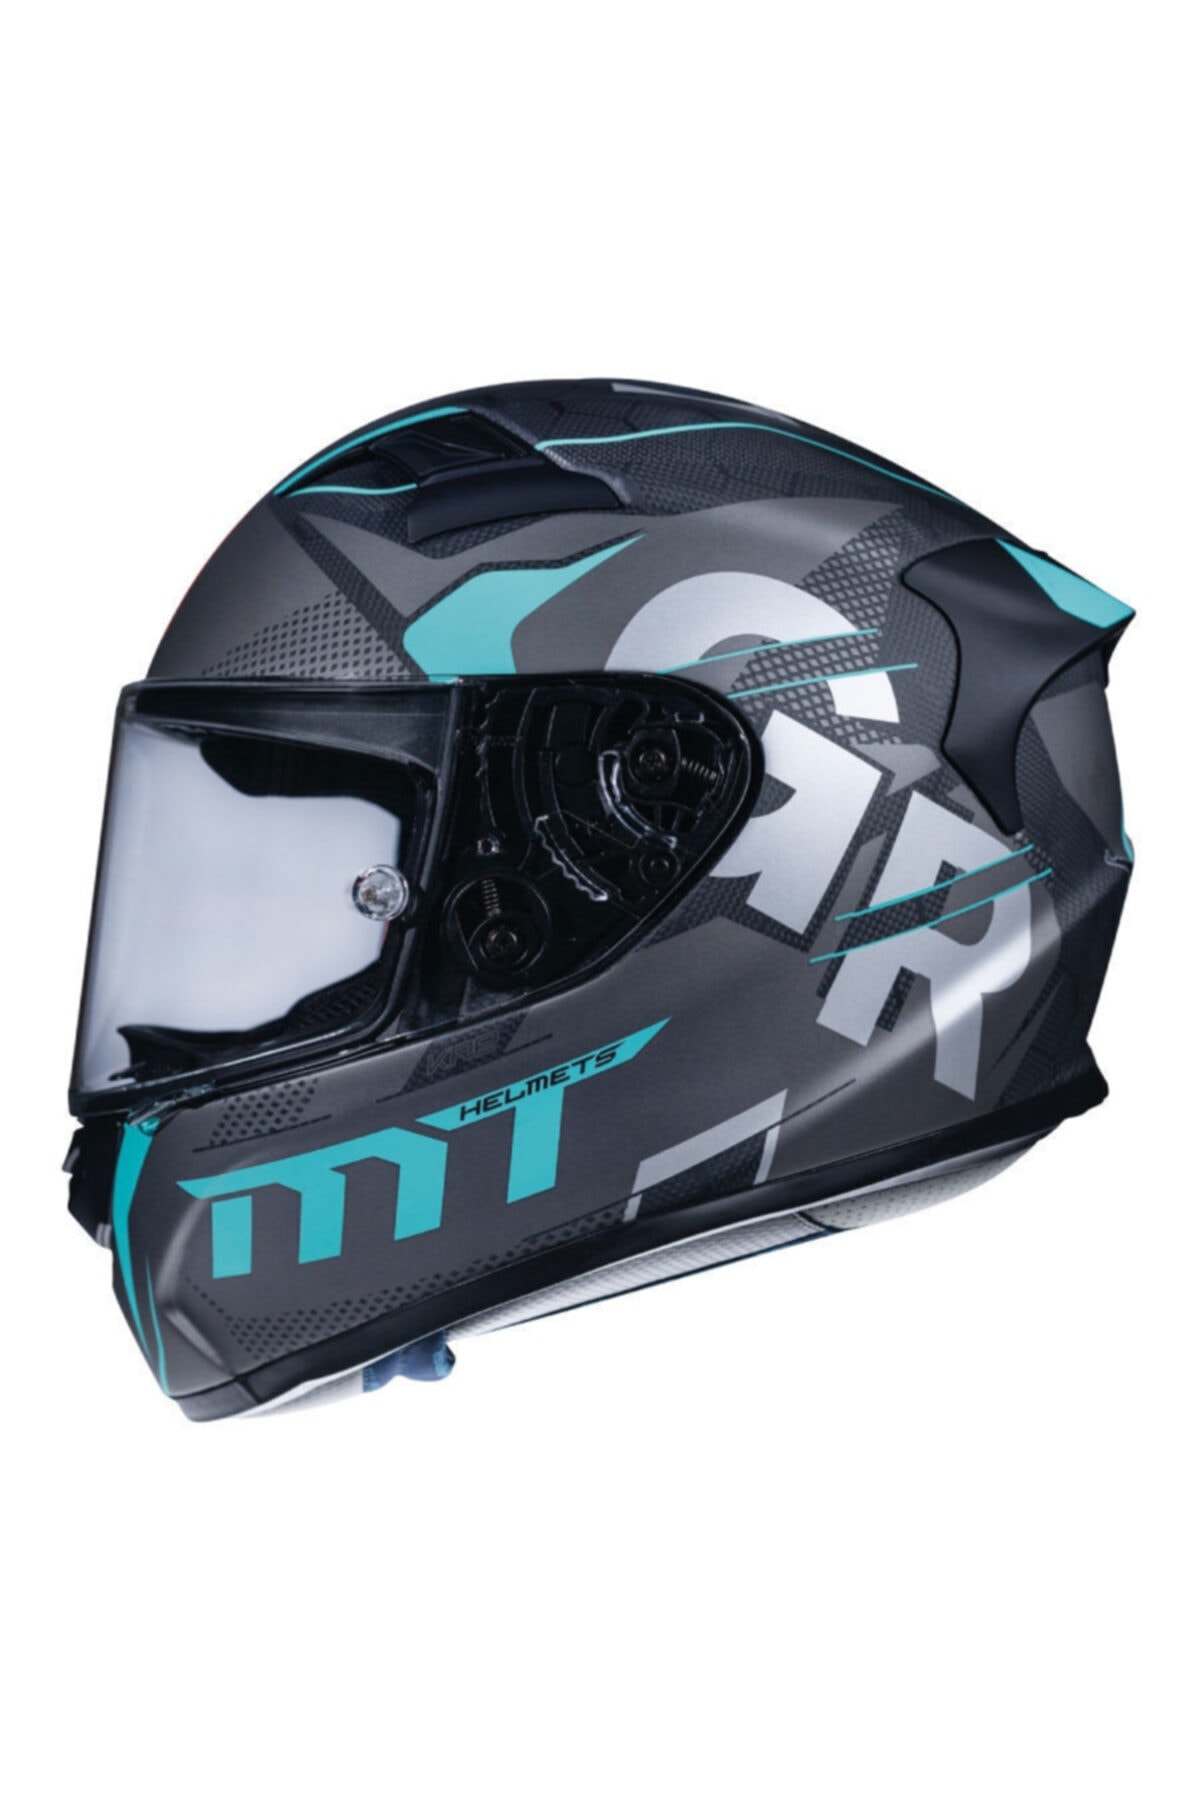 MT Kask Kre Carbon Gabri A8 Mat Gri Siyah Mavi Kapalı Motosiklet Kaskı